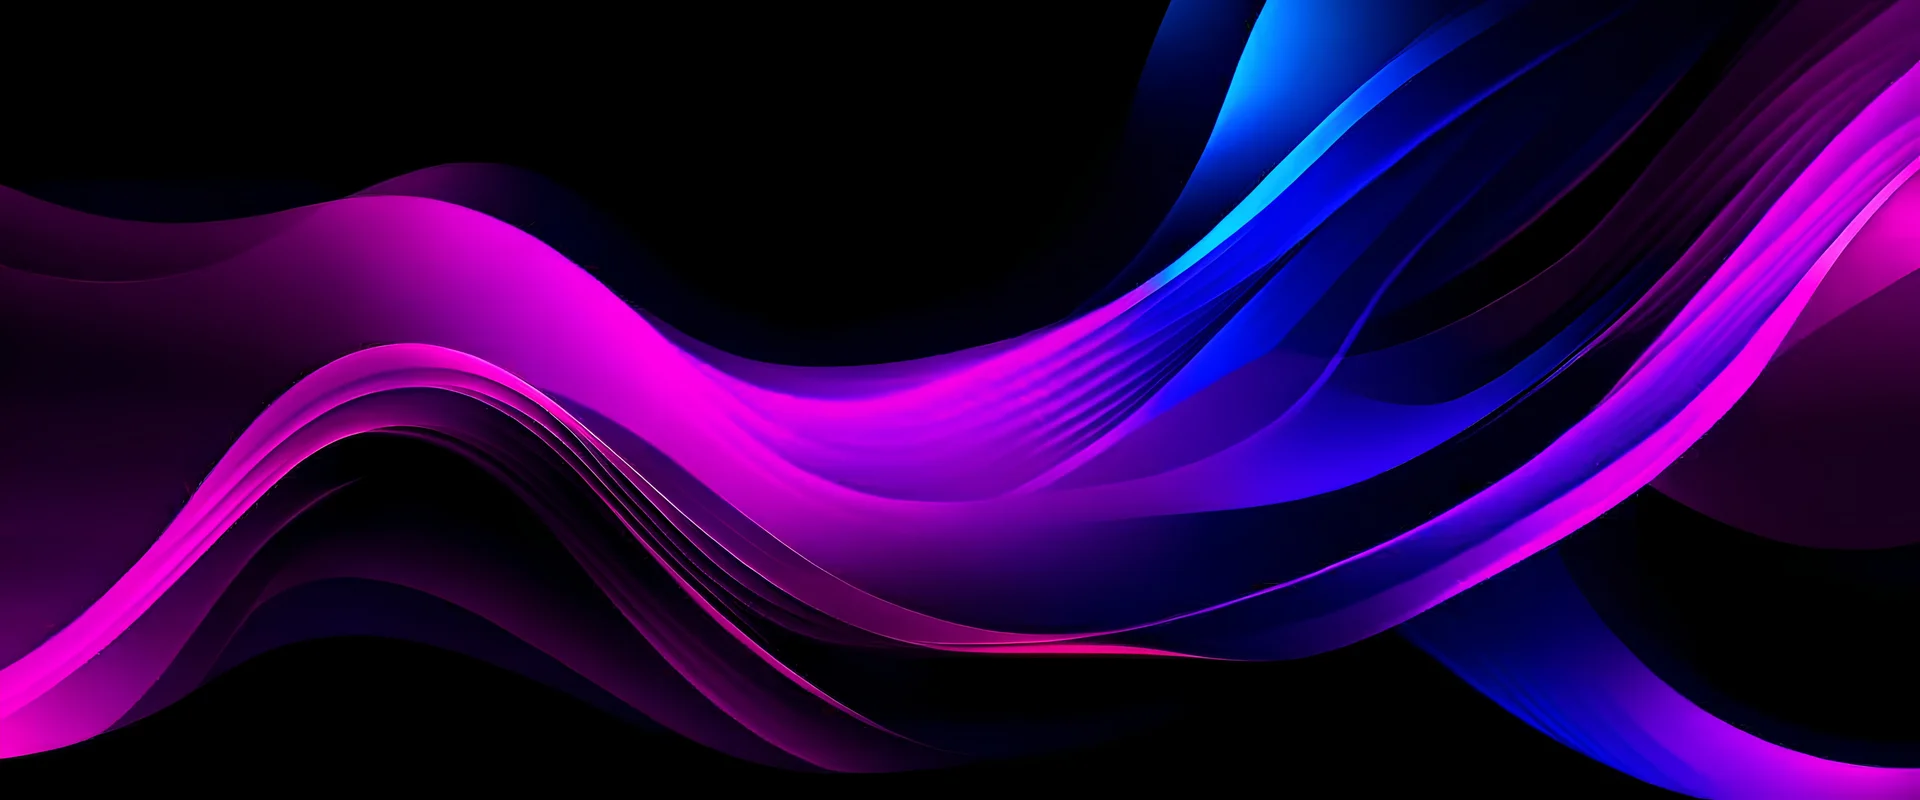 Purple magenta pink blue abstract color wave black background grainy texture banner website header design